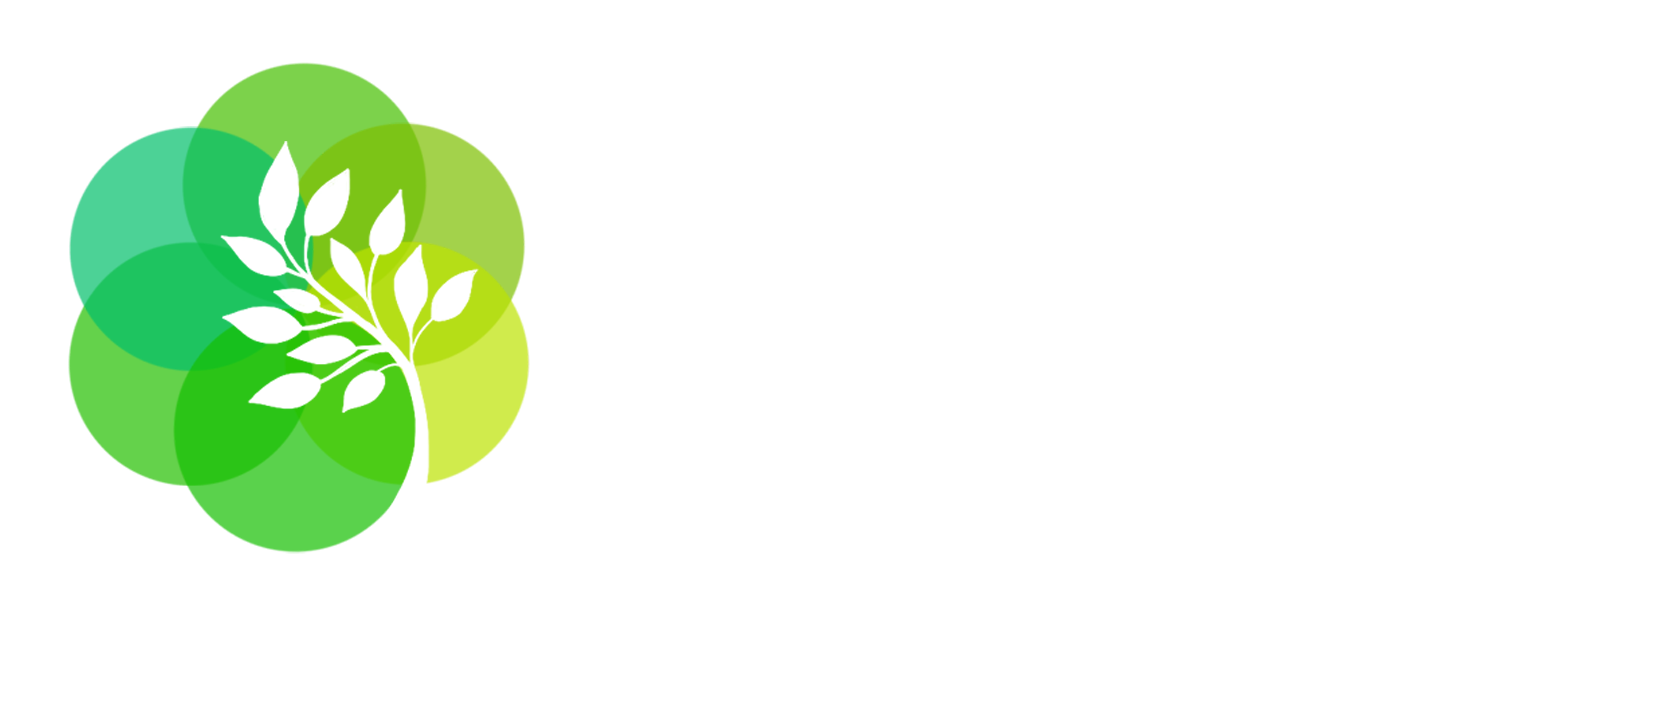 Ethical Green Living